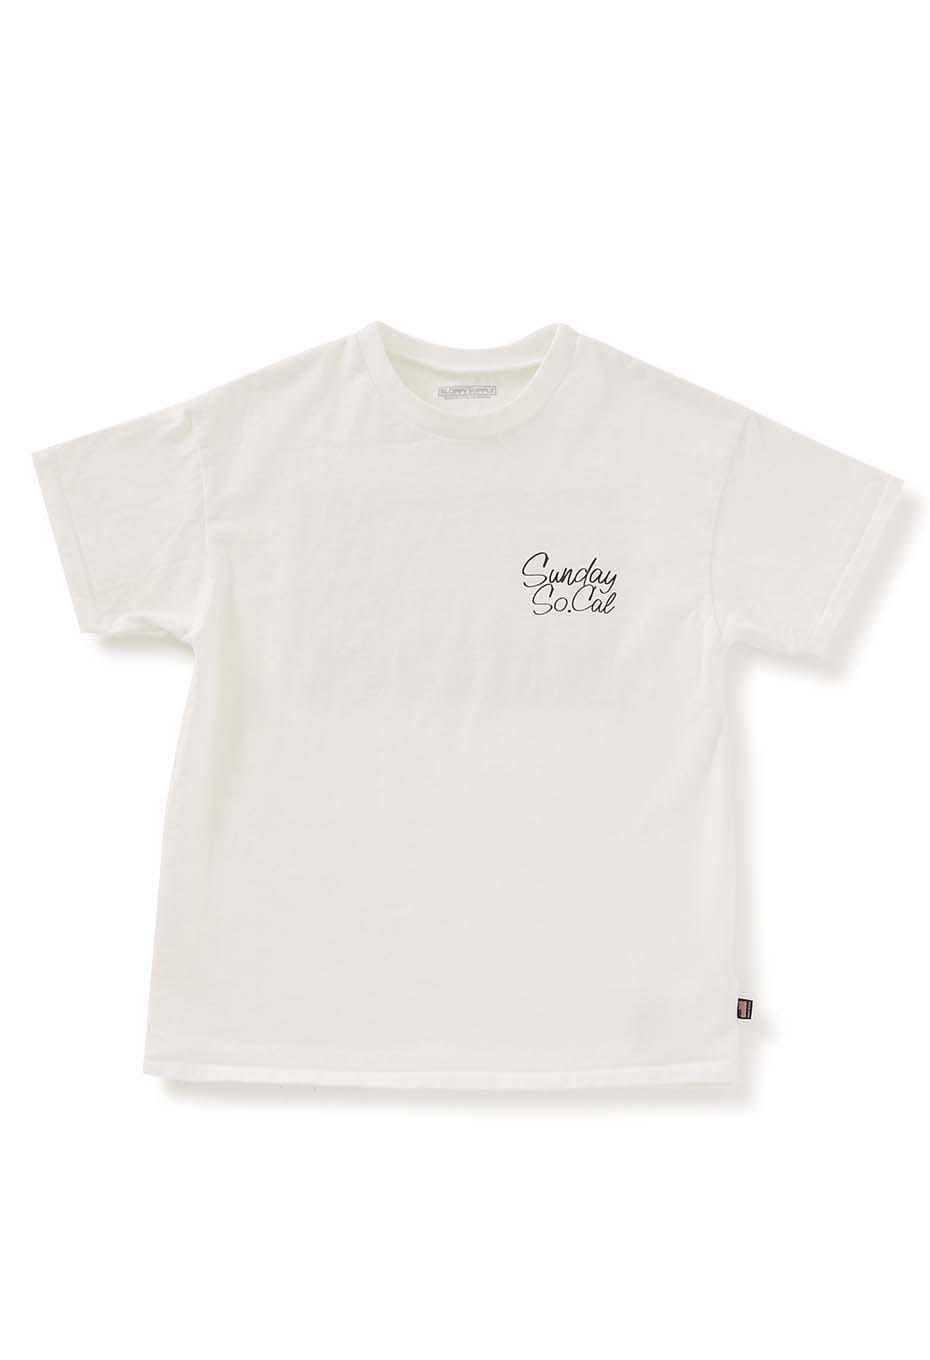 SLOPPY SUPPLY / SUNDAY SO.CAL T-shirts